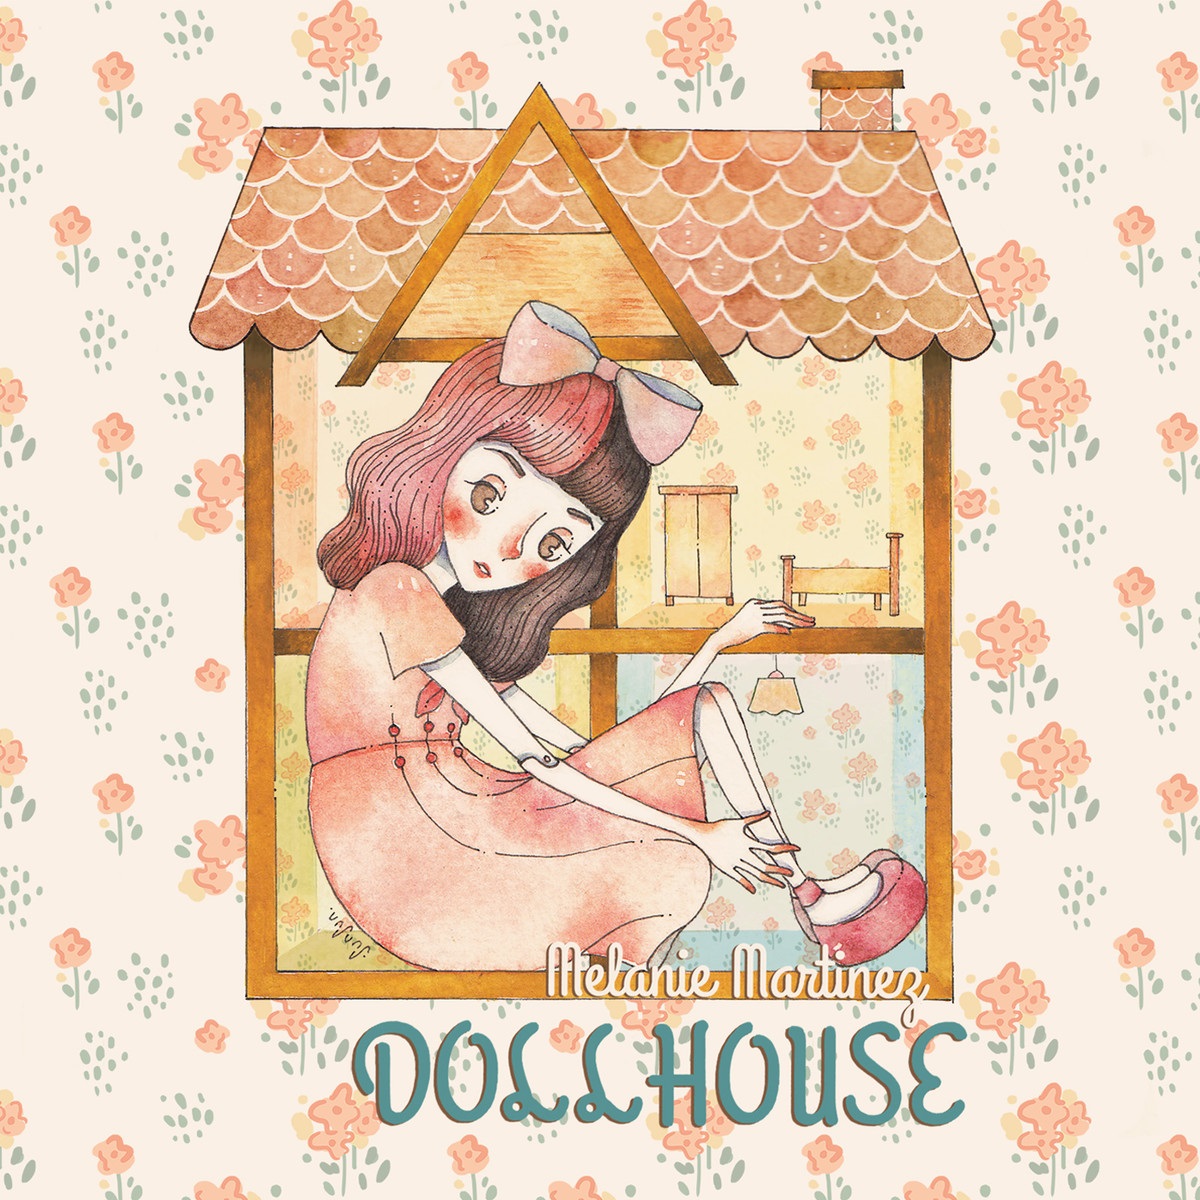 Dollhouse, Music Video Wiki